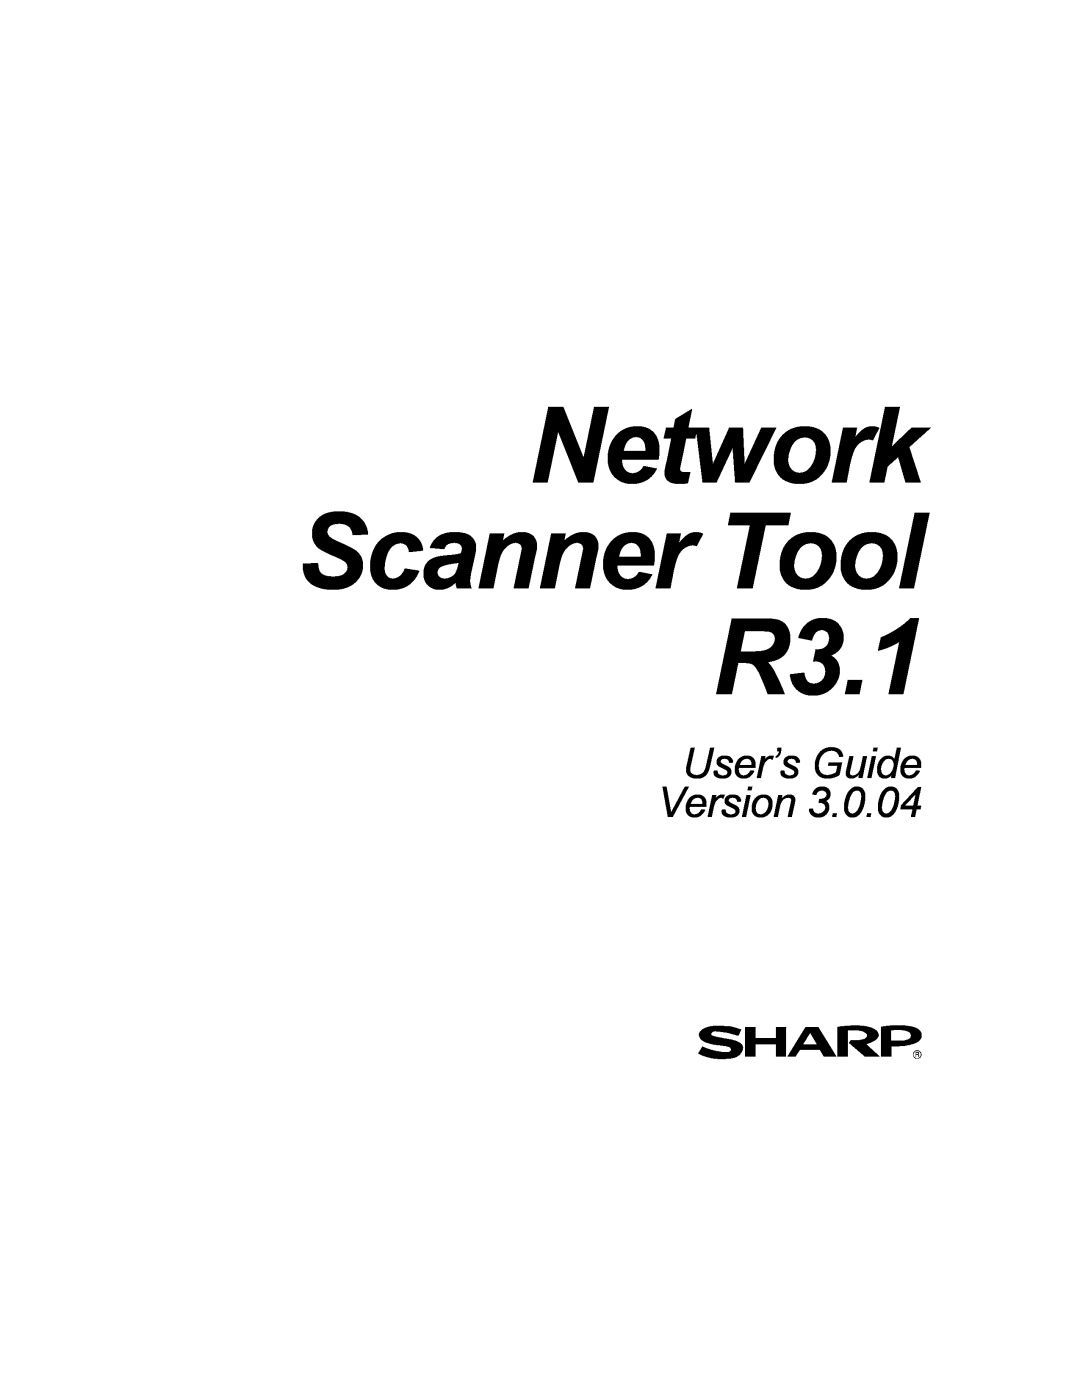 Sharp manual Network Scanner Tool R3.1, User’s Guide Version 